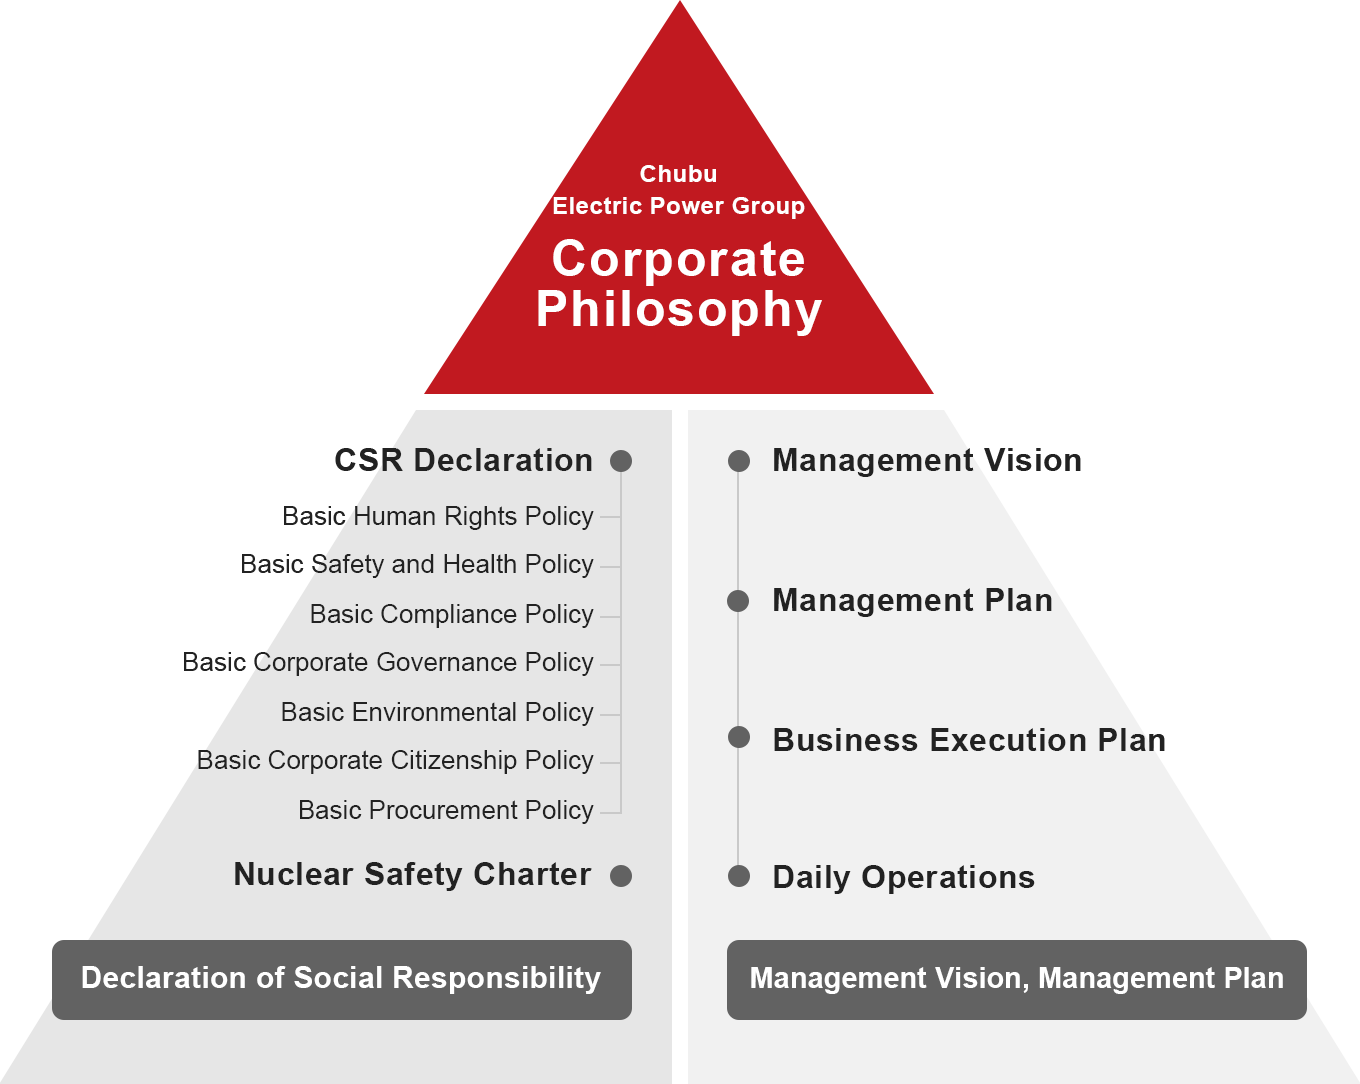 Chubu Electric Power Group Corporate Philosophy